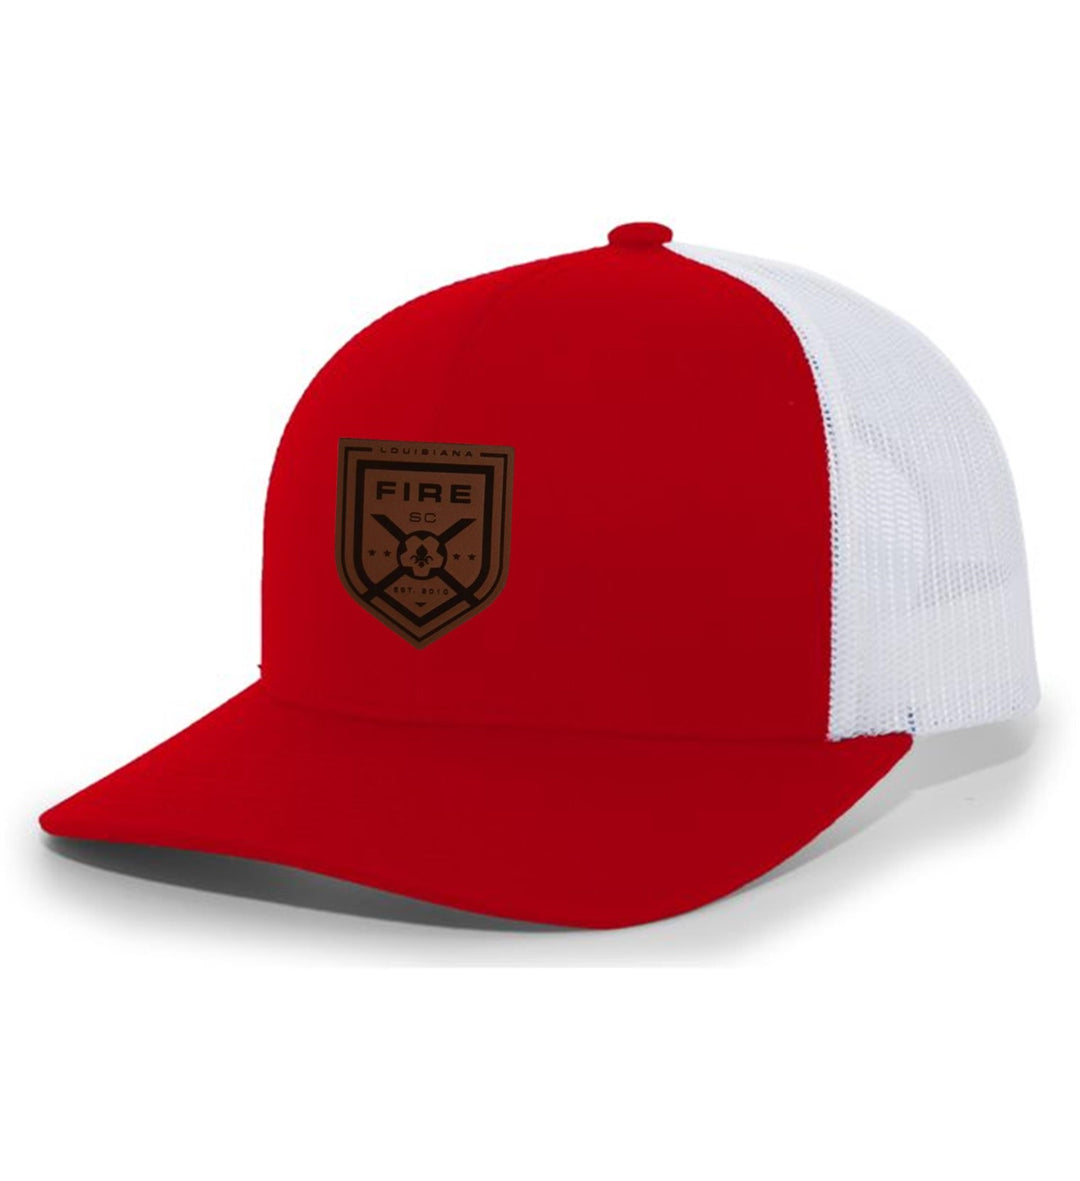 TCS Louisiana Fire Flexfit Premium Trucker Hat Louisiana Fire Spiritwear Red/White Leather Patch - Third Coast Soccer